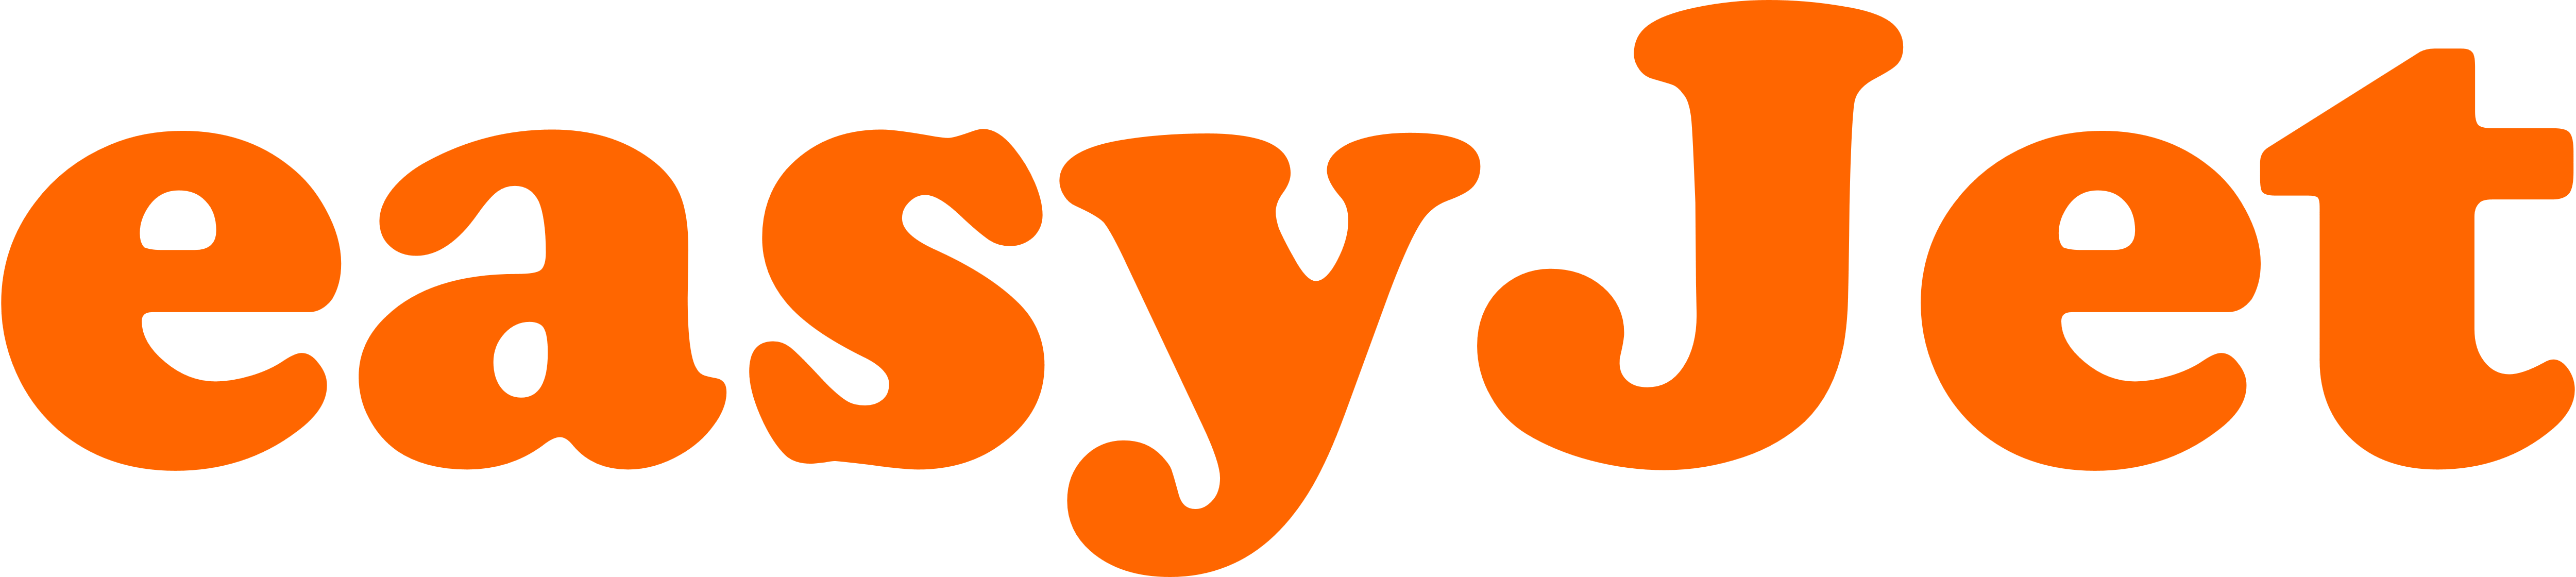 CMS_easyjet_logo